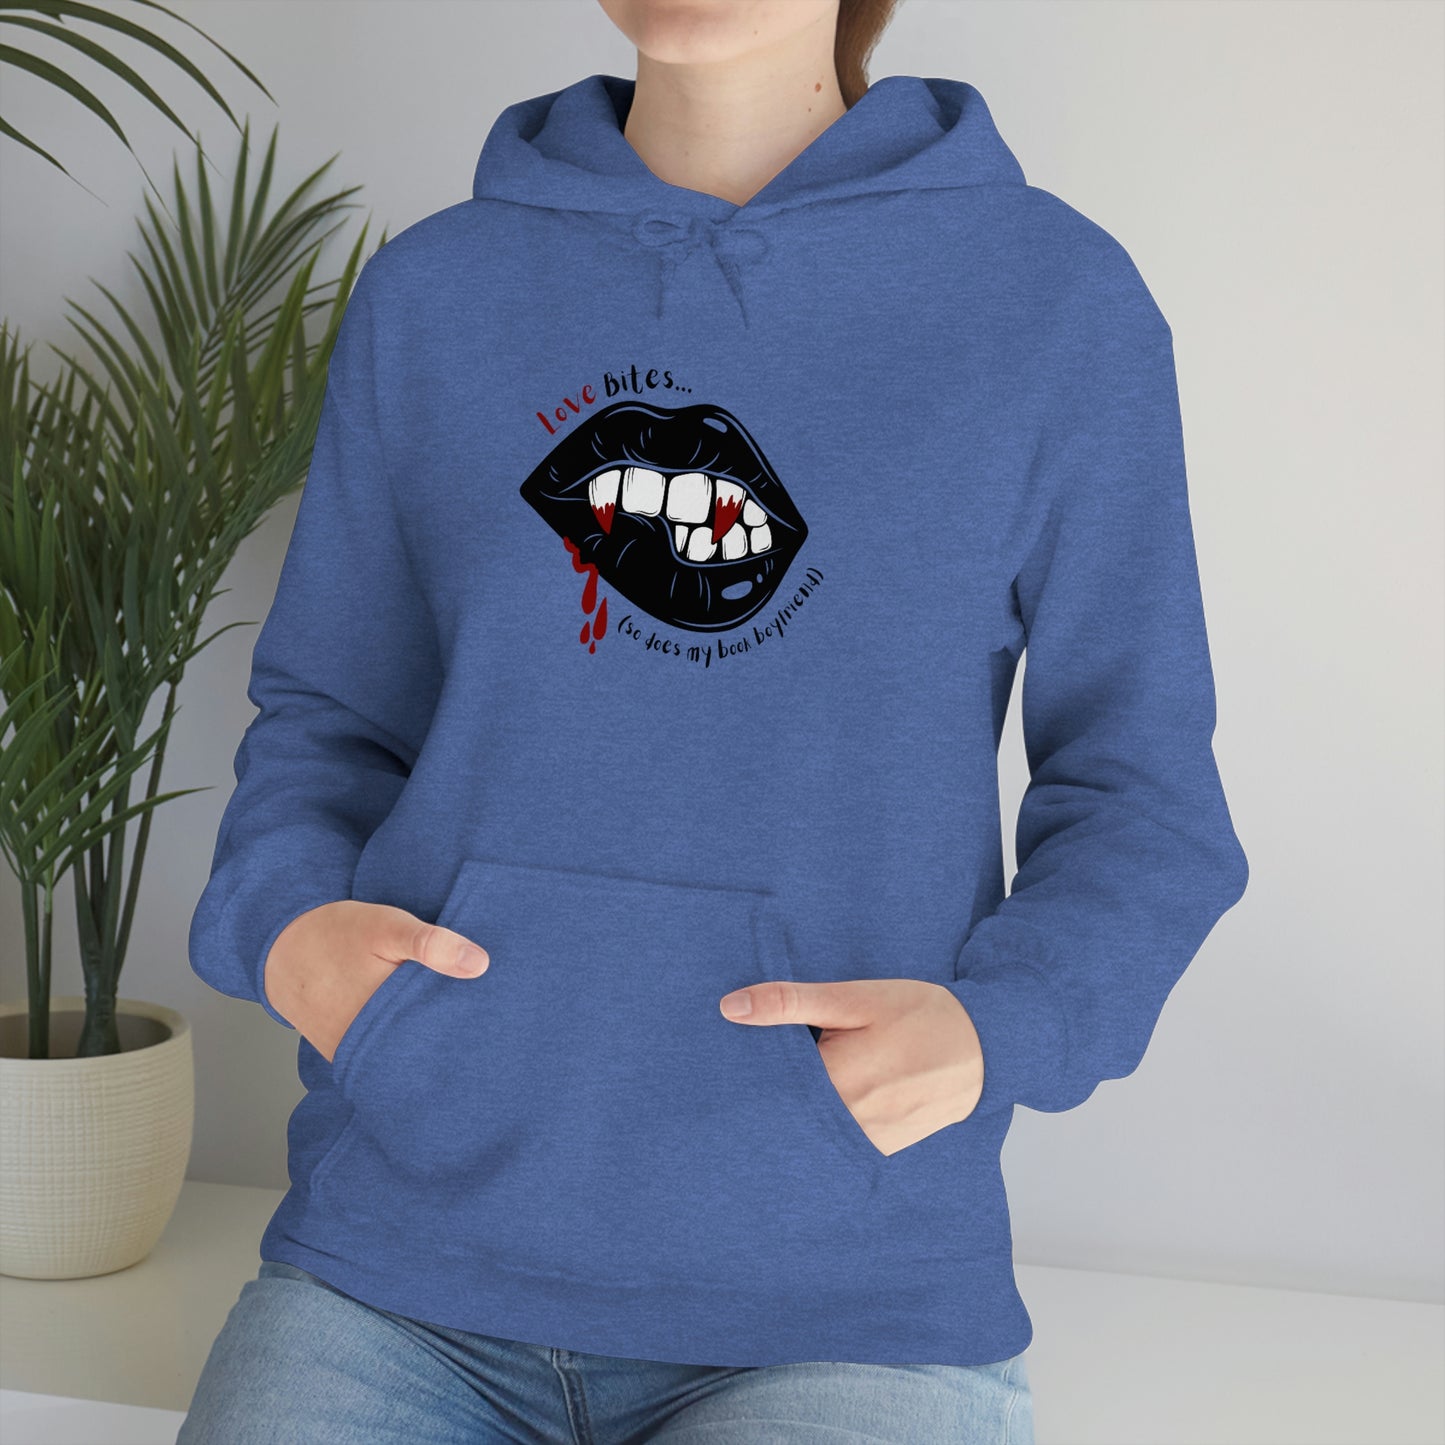 Love Bites Hooded Sweatshirt